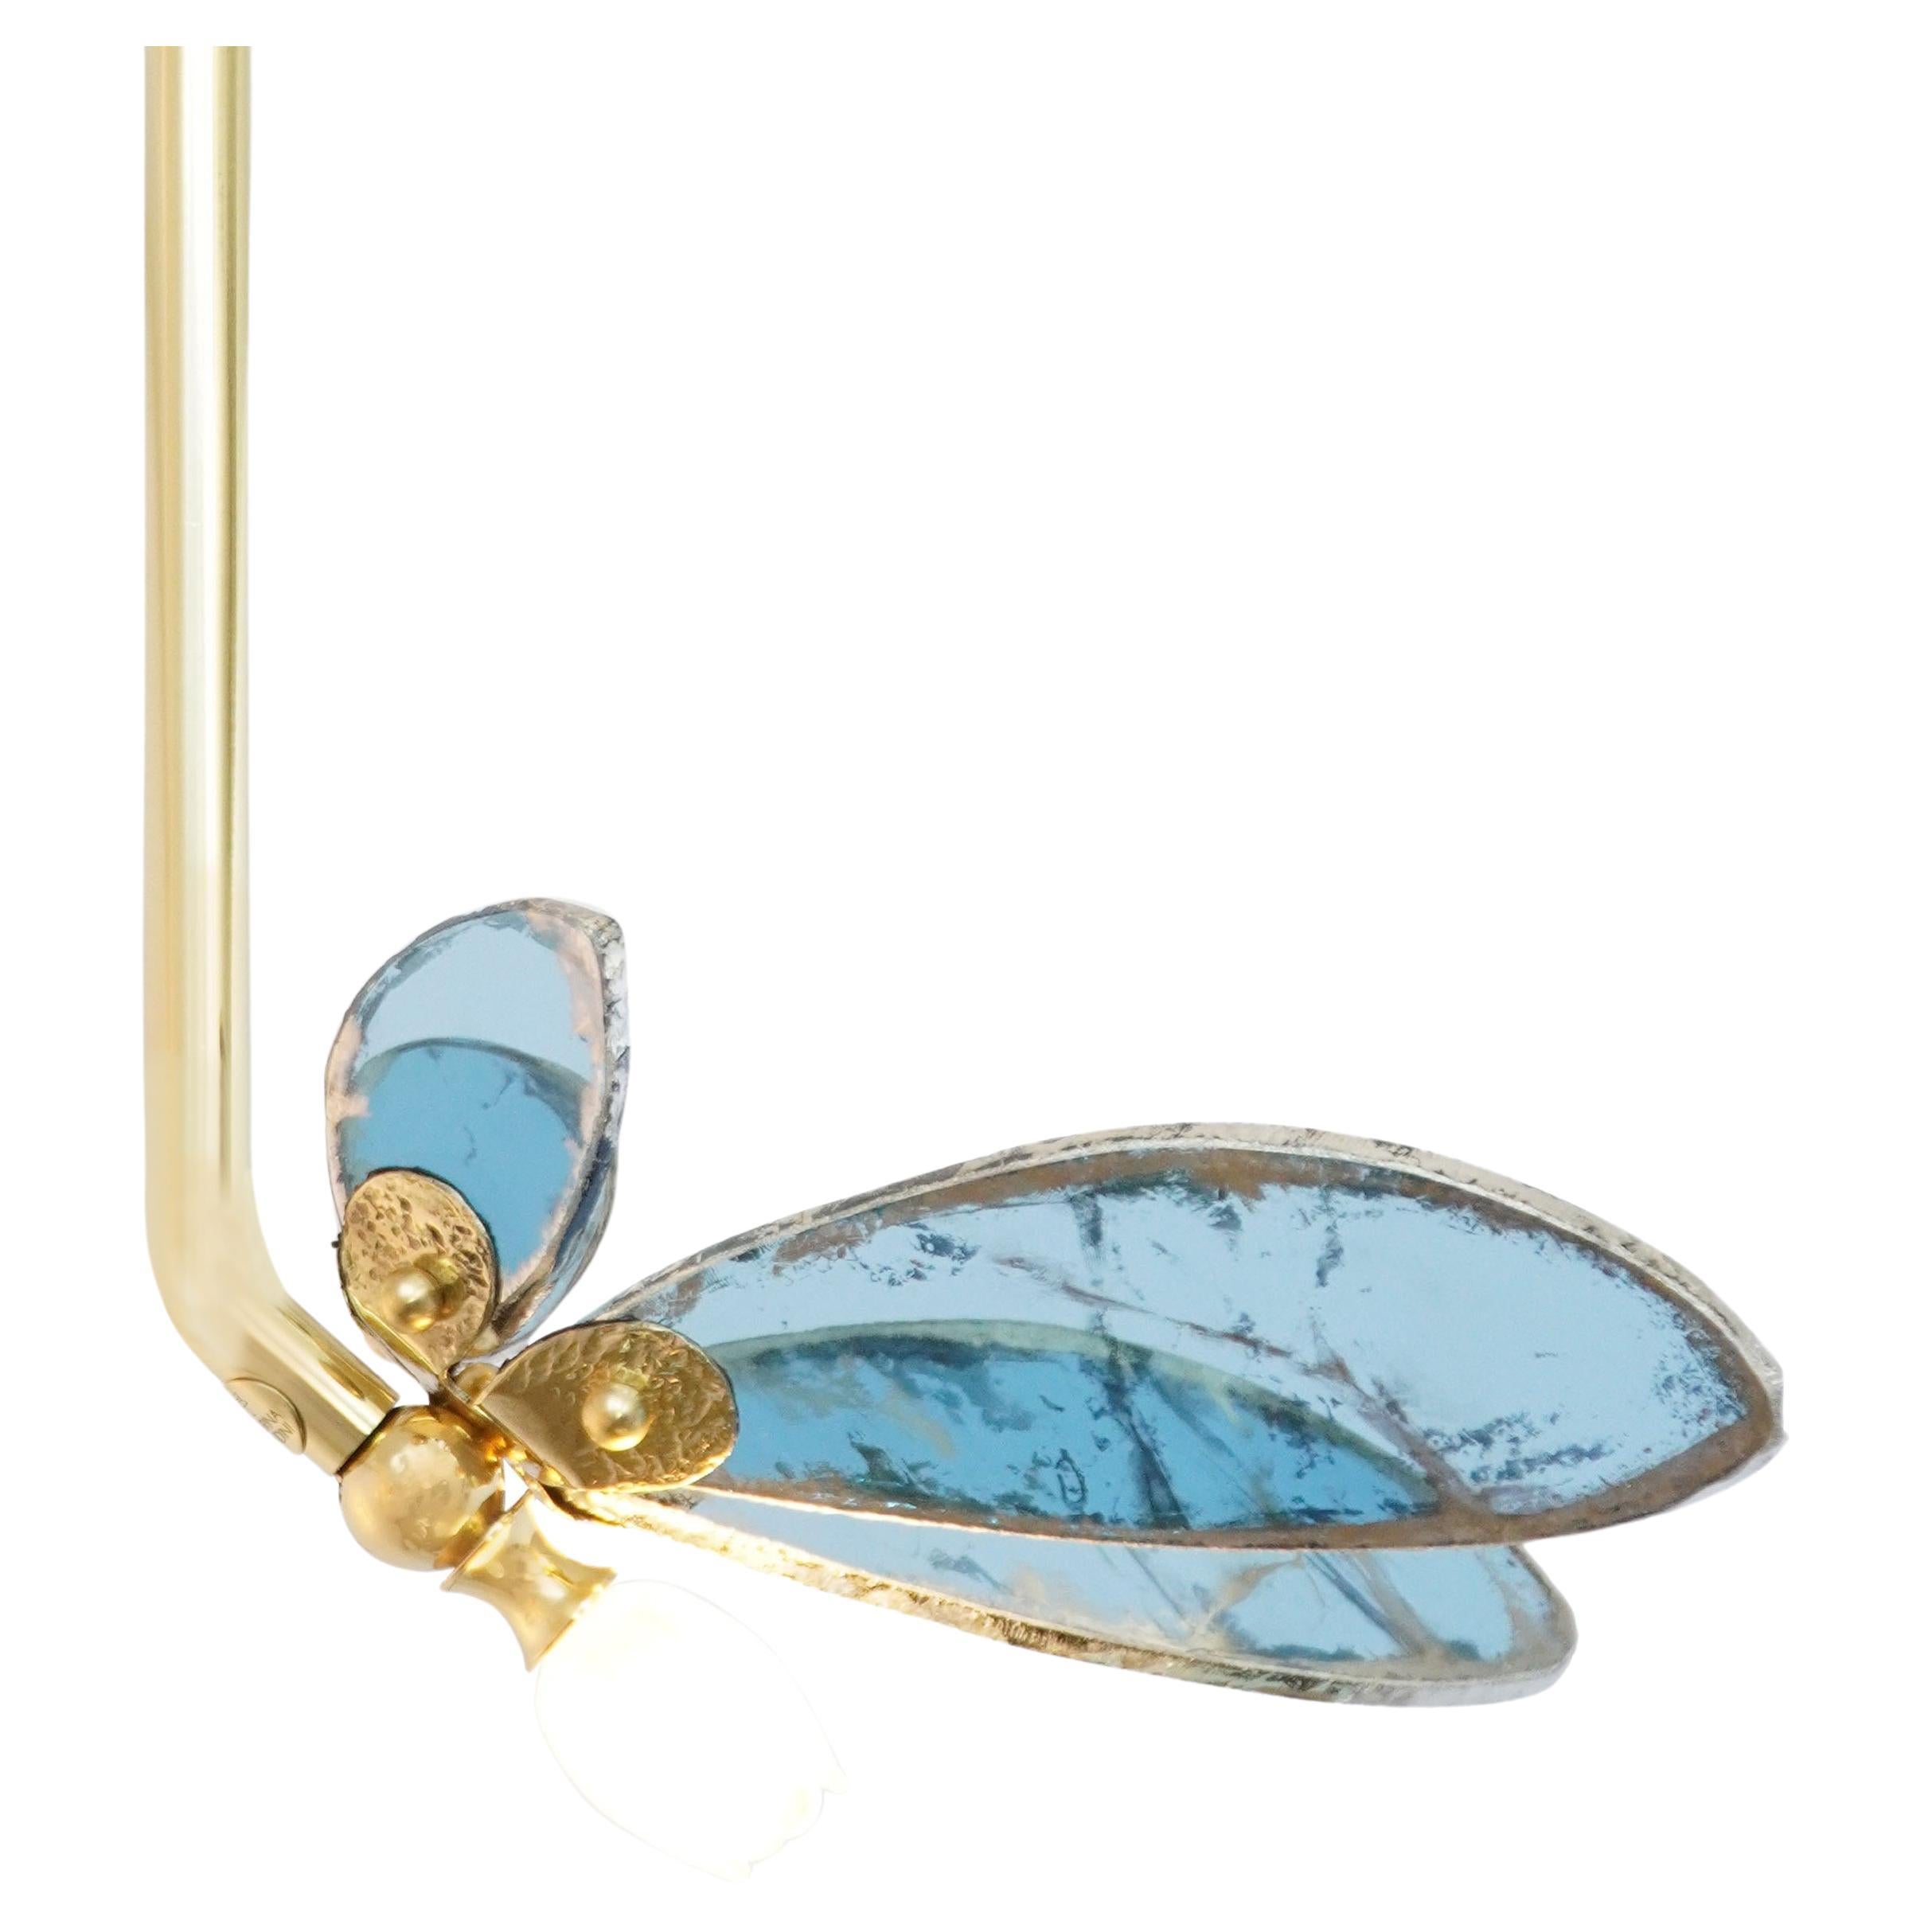 "Trilly" Contemporary Pendant Lamp Light Blue Silvered Art Glass, Brass Body